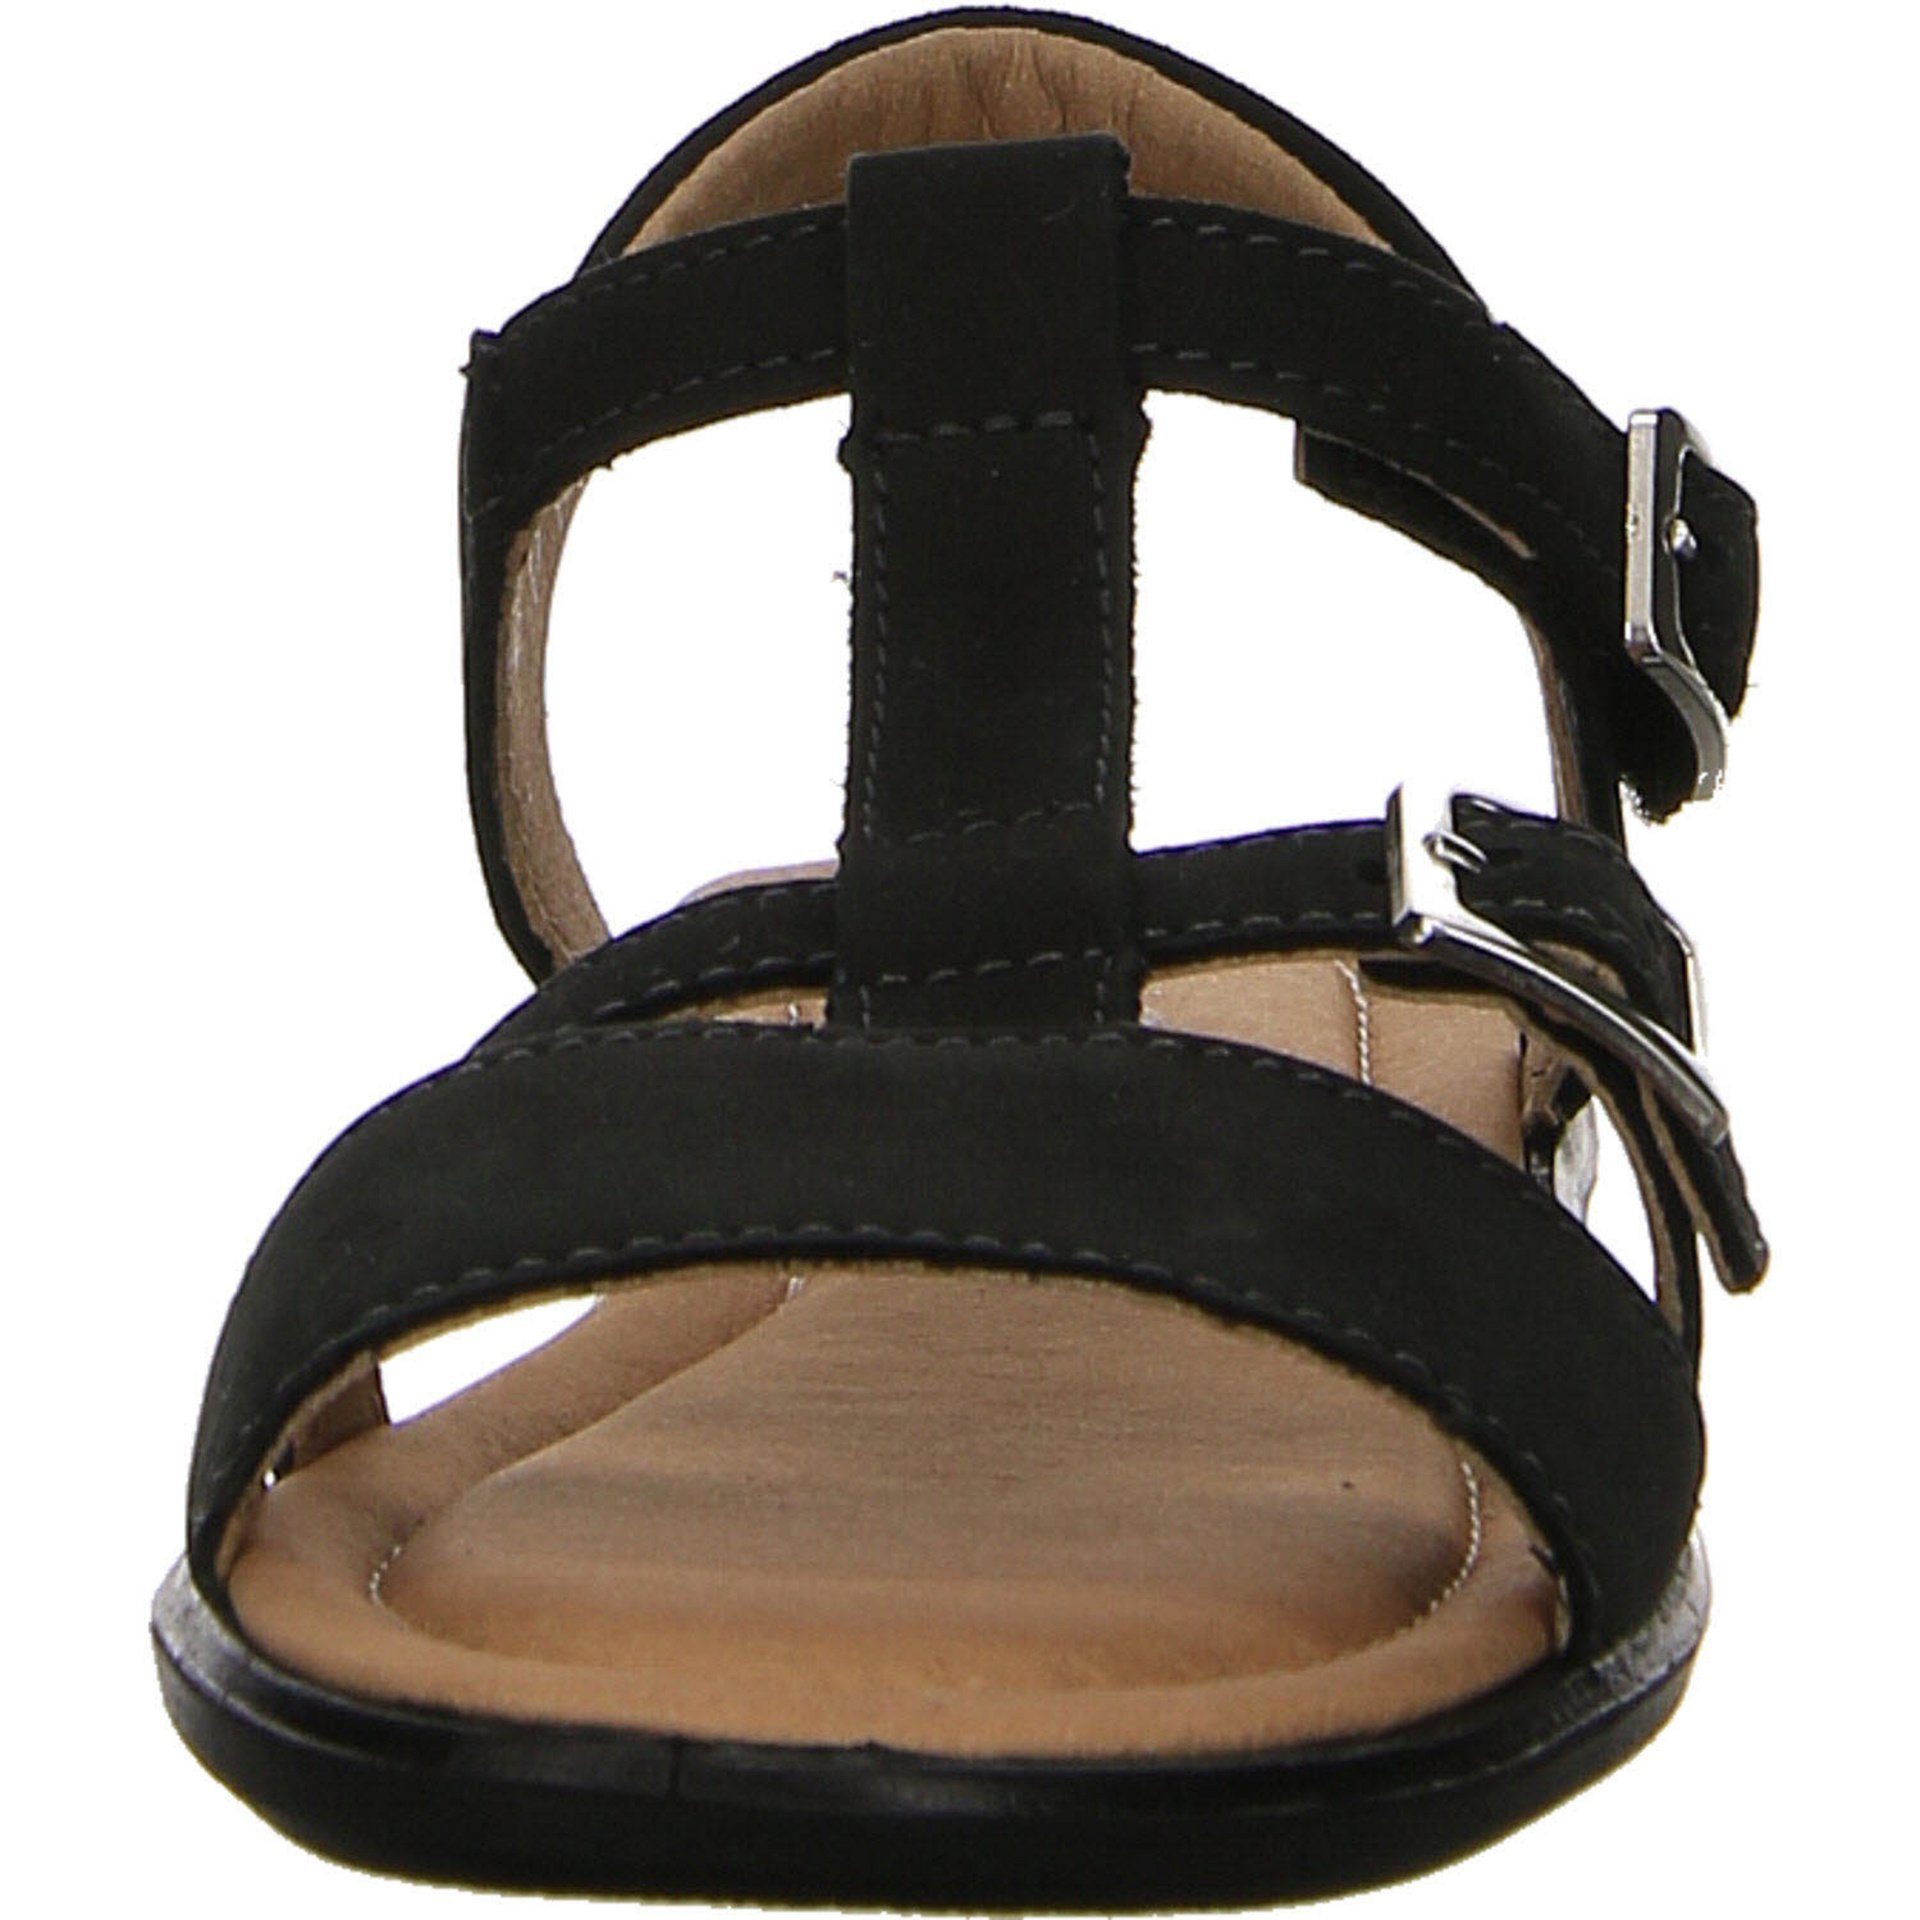 Ricosta Mädchen Sandalen Schuhe Kalja Sandalen Sandale Glattleder schwarz dunkel